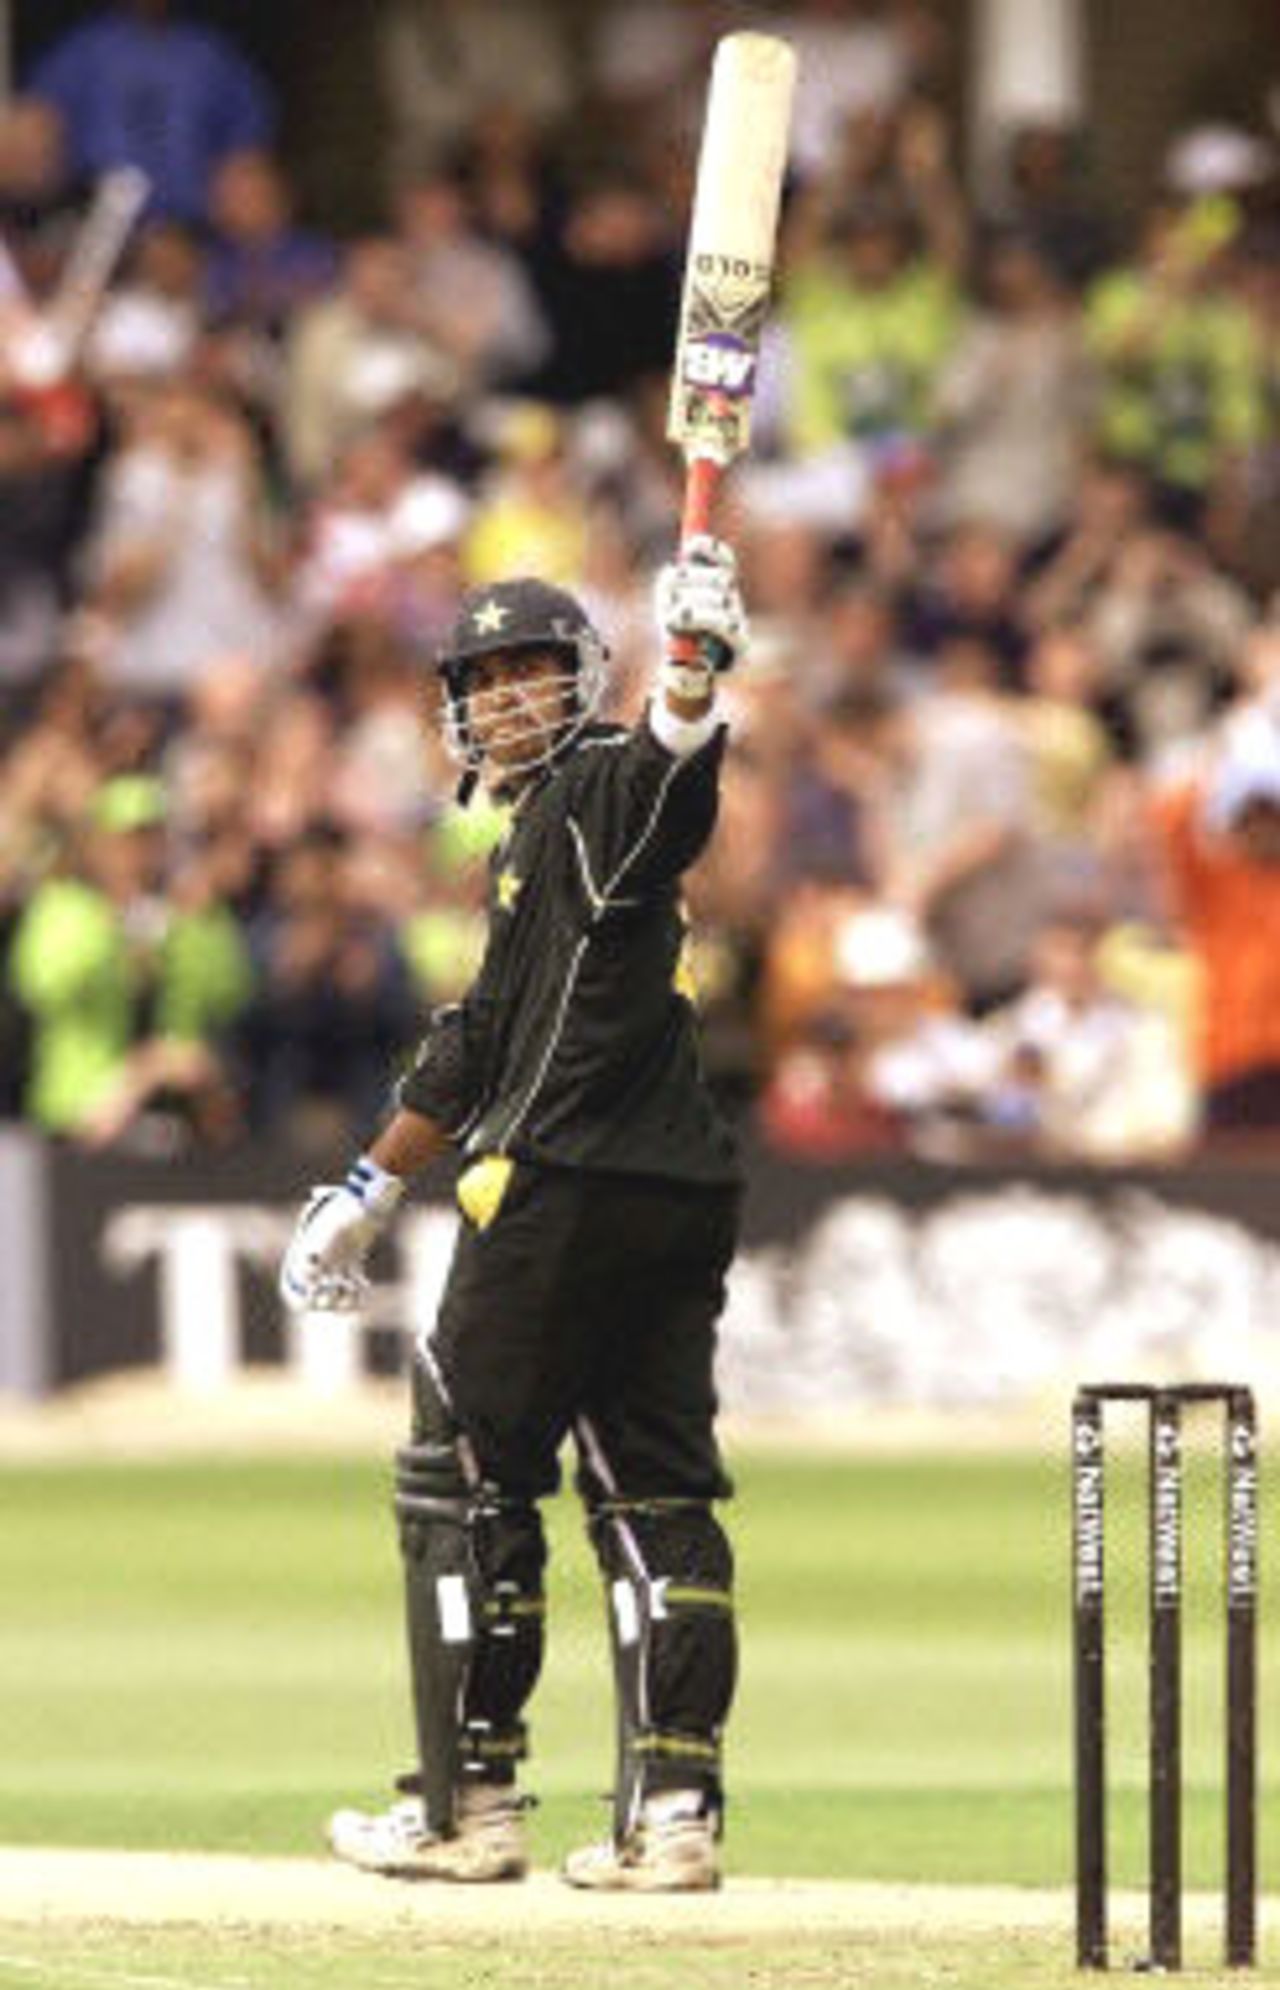 Salim Elahi acknowledges the applause after scoring his fifty against Australia, 8th ODI at Trent Bridge, 19 June 2001.